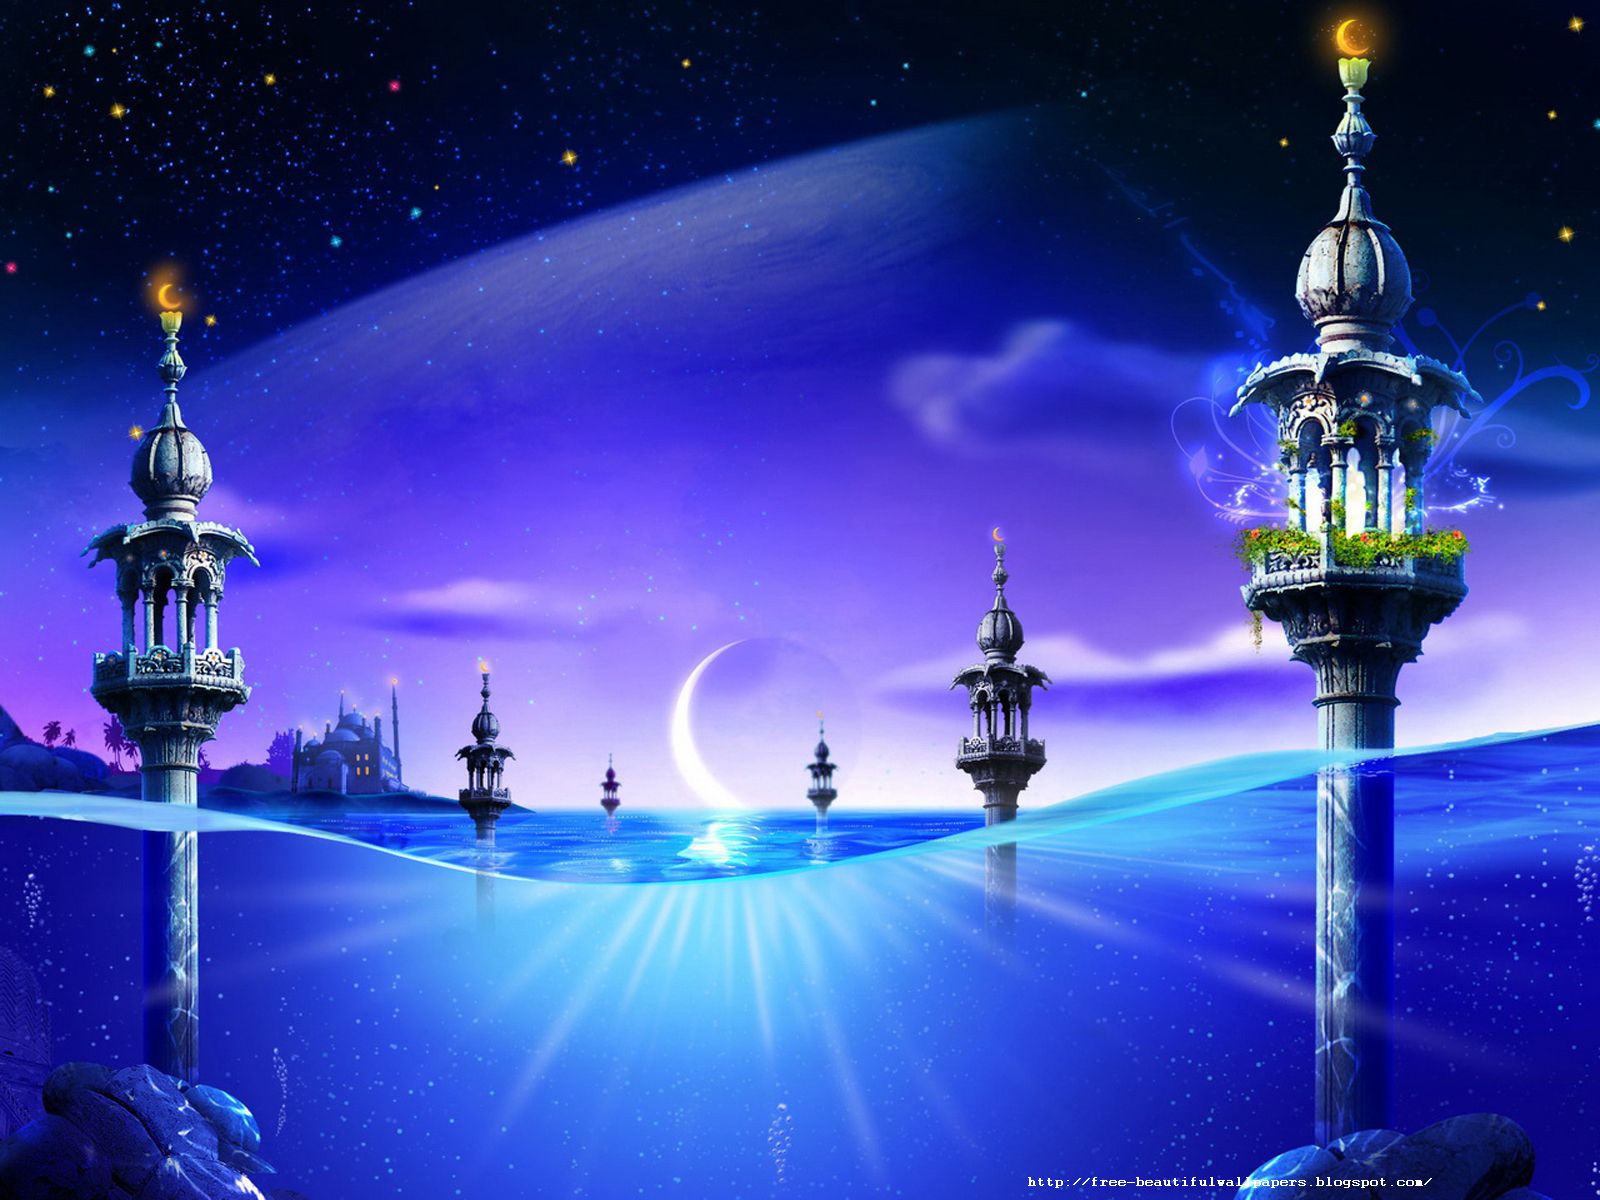 Free Beautiful wallpapers Download: Islamic Beautiful Wallpapers